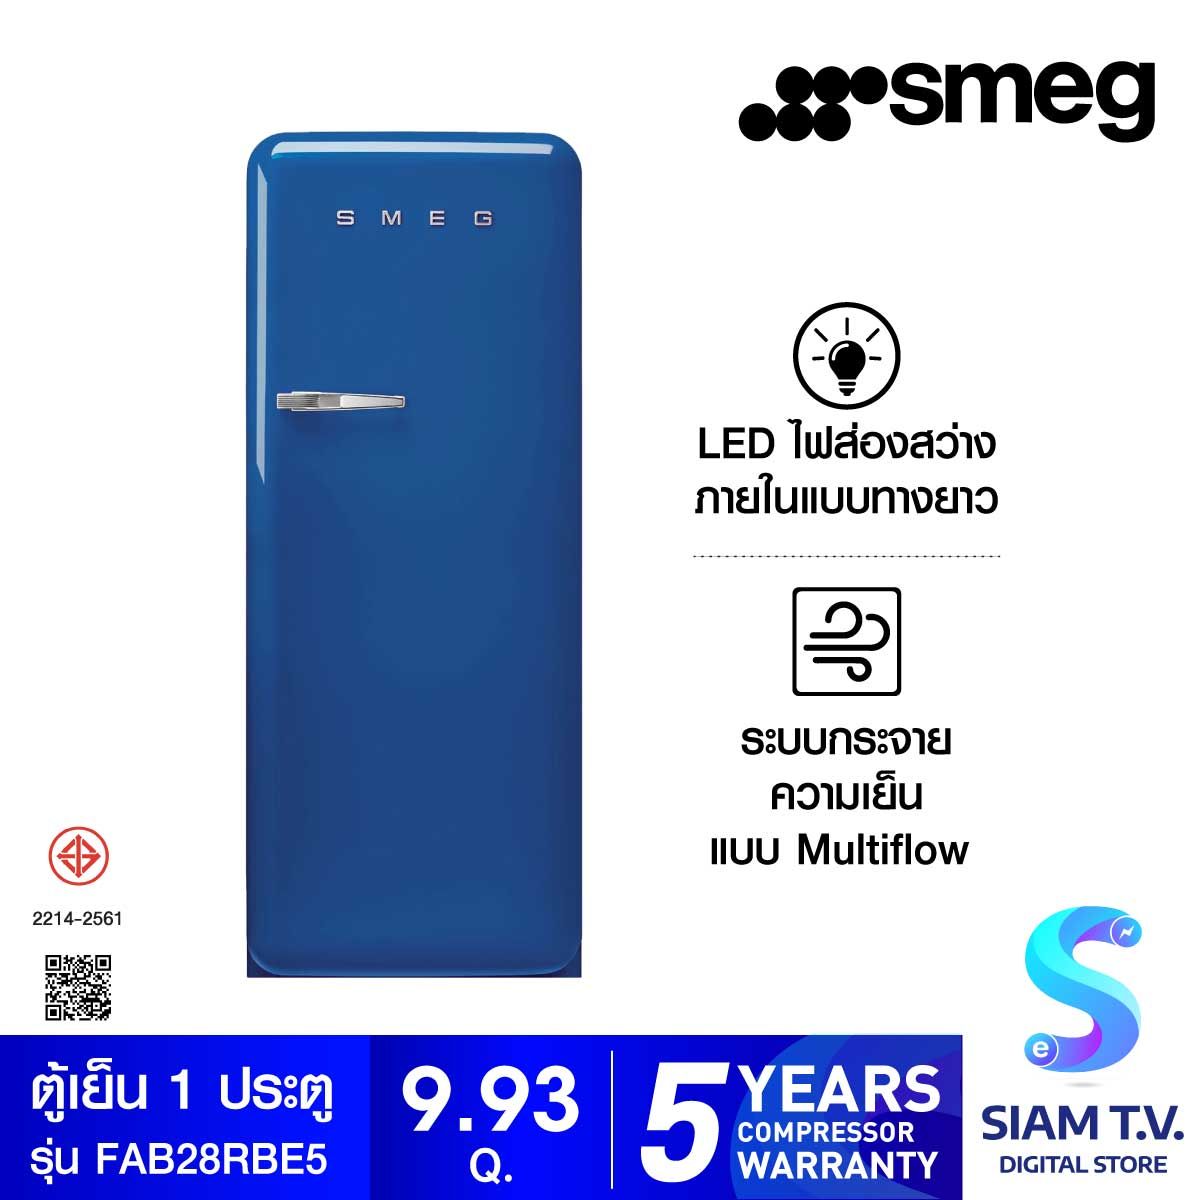 SMEG ตู้เย็น 1 ประตู 9.93 Q.สไตล์ 50 Retro Aesthetic รุ่น FAB28RBE5 สีน้ำเงิน